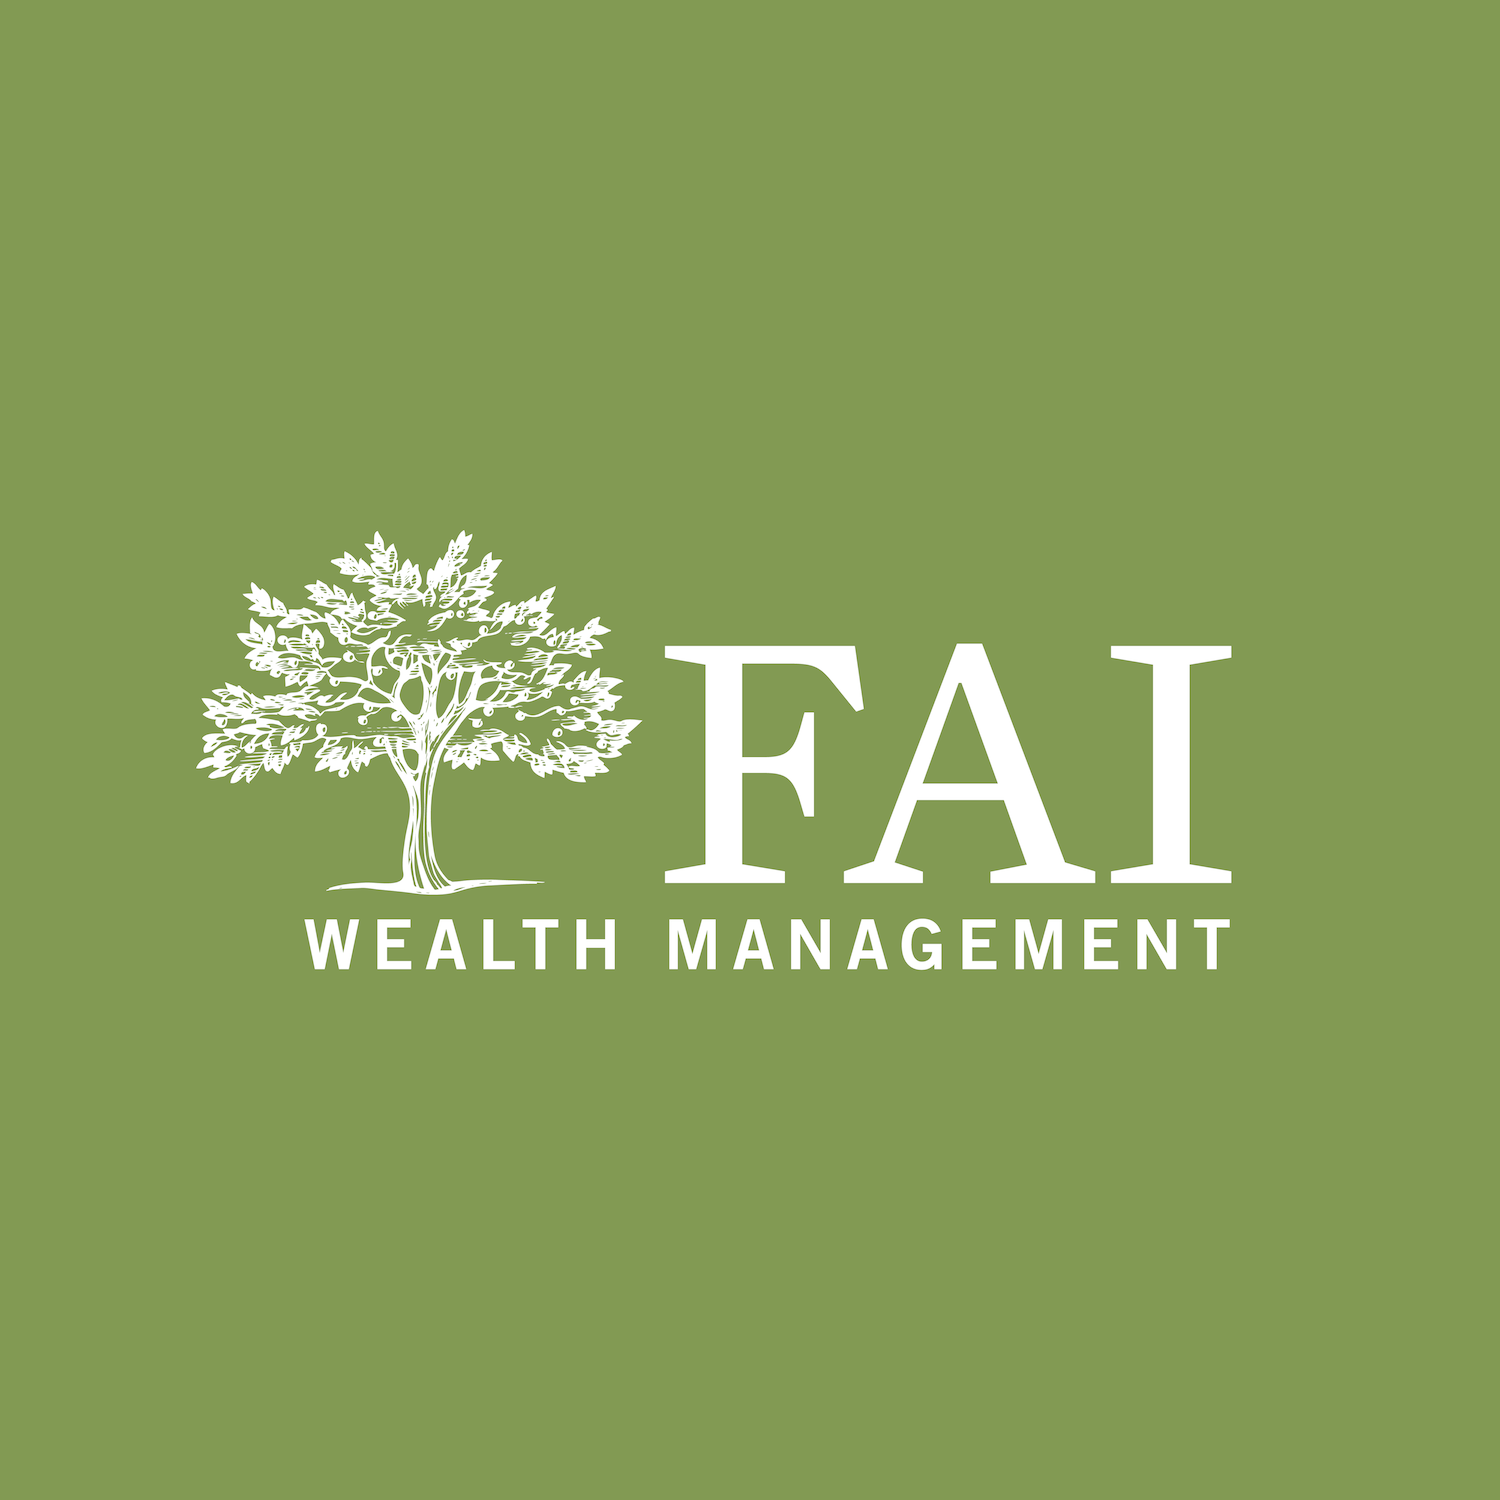 #2 FAI Chief Investment Officer, Curt Gross